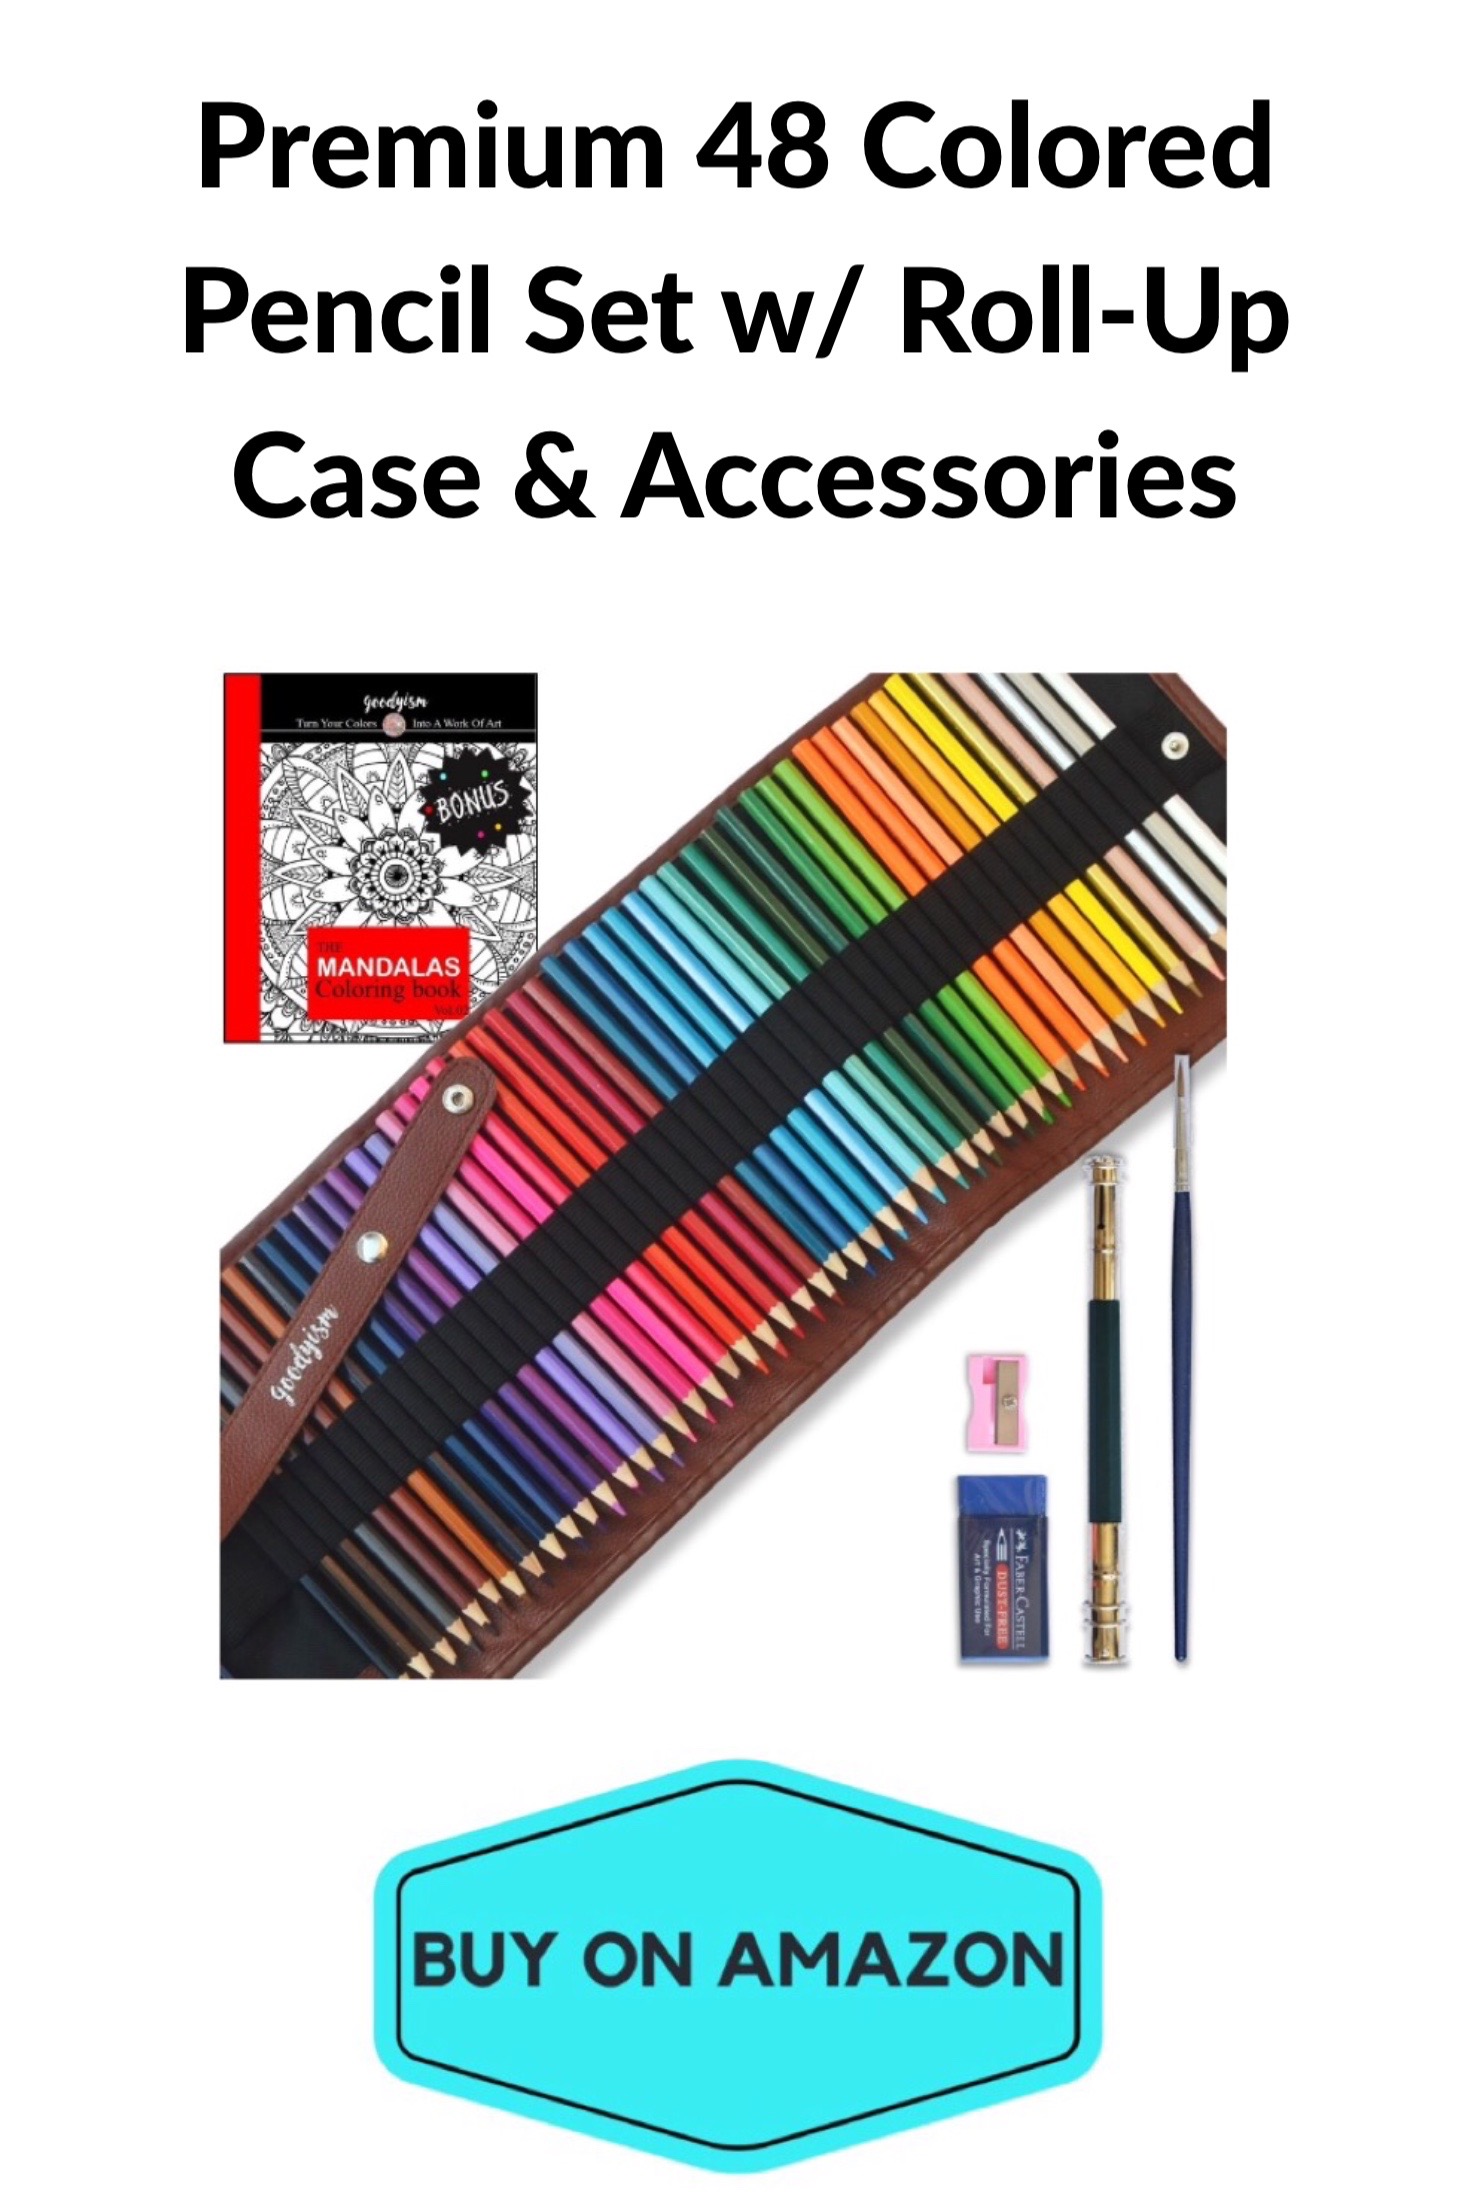 Premium 48 Colored Pencil Set w/ Roll-Up Case